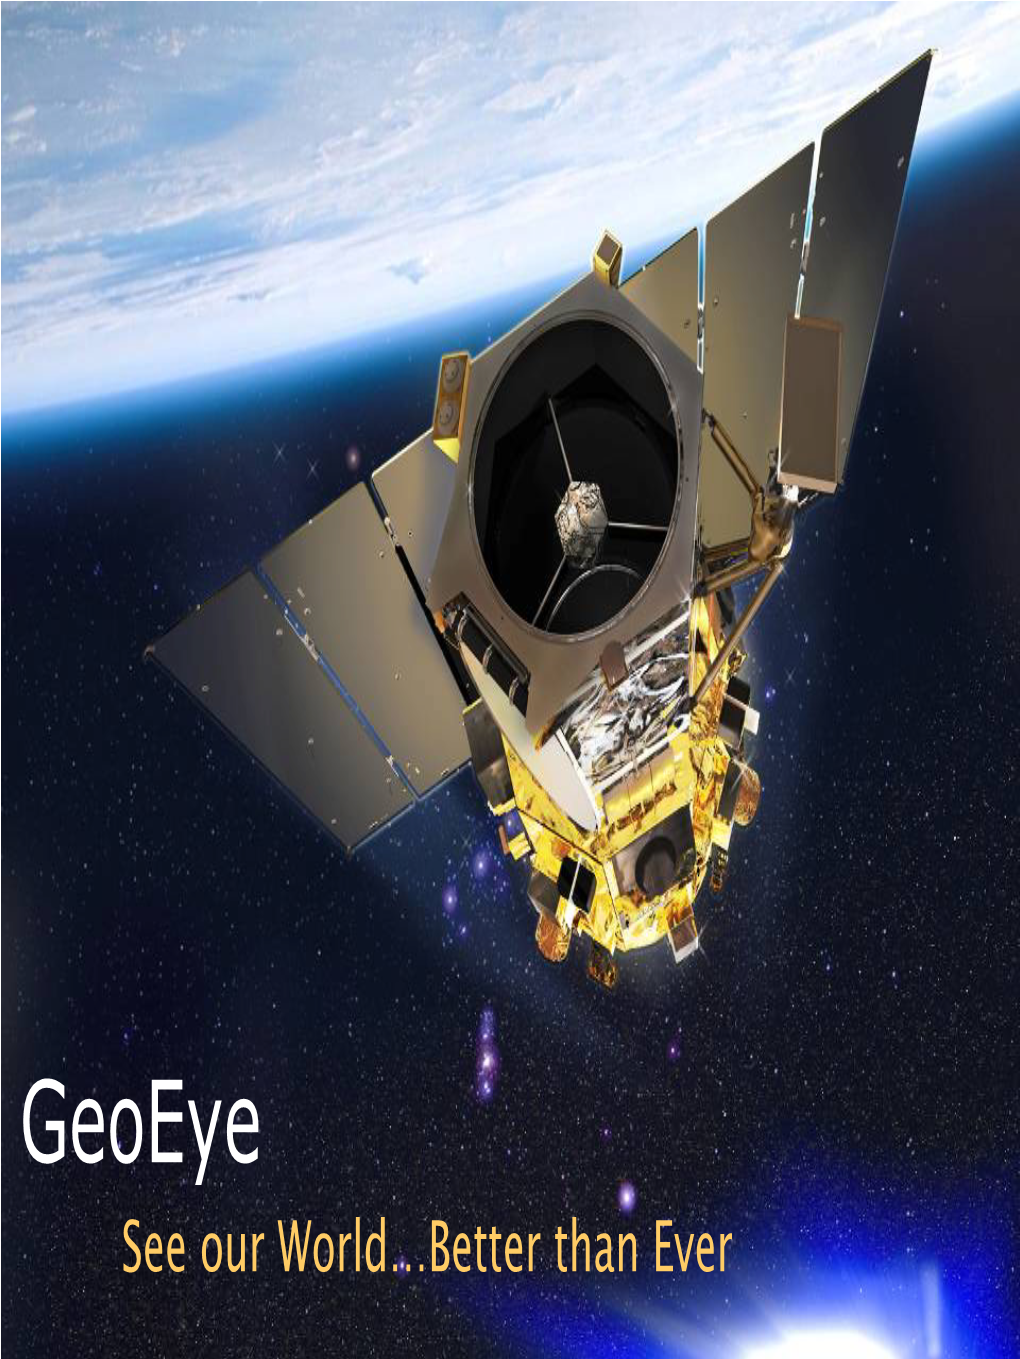 Geoeye Corp Overview